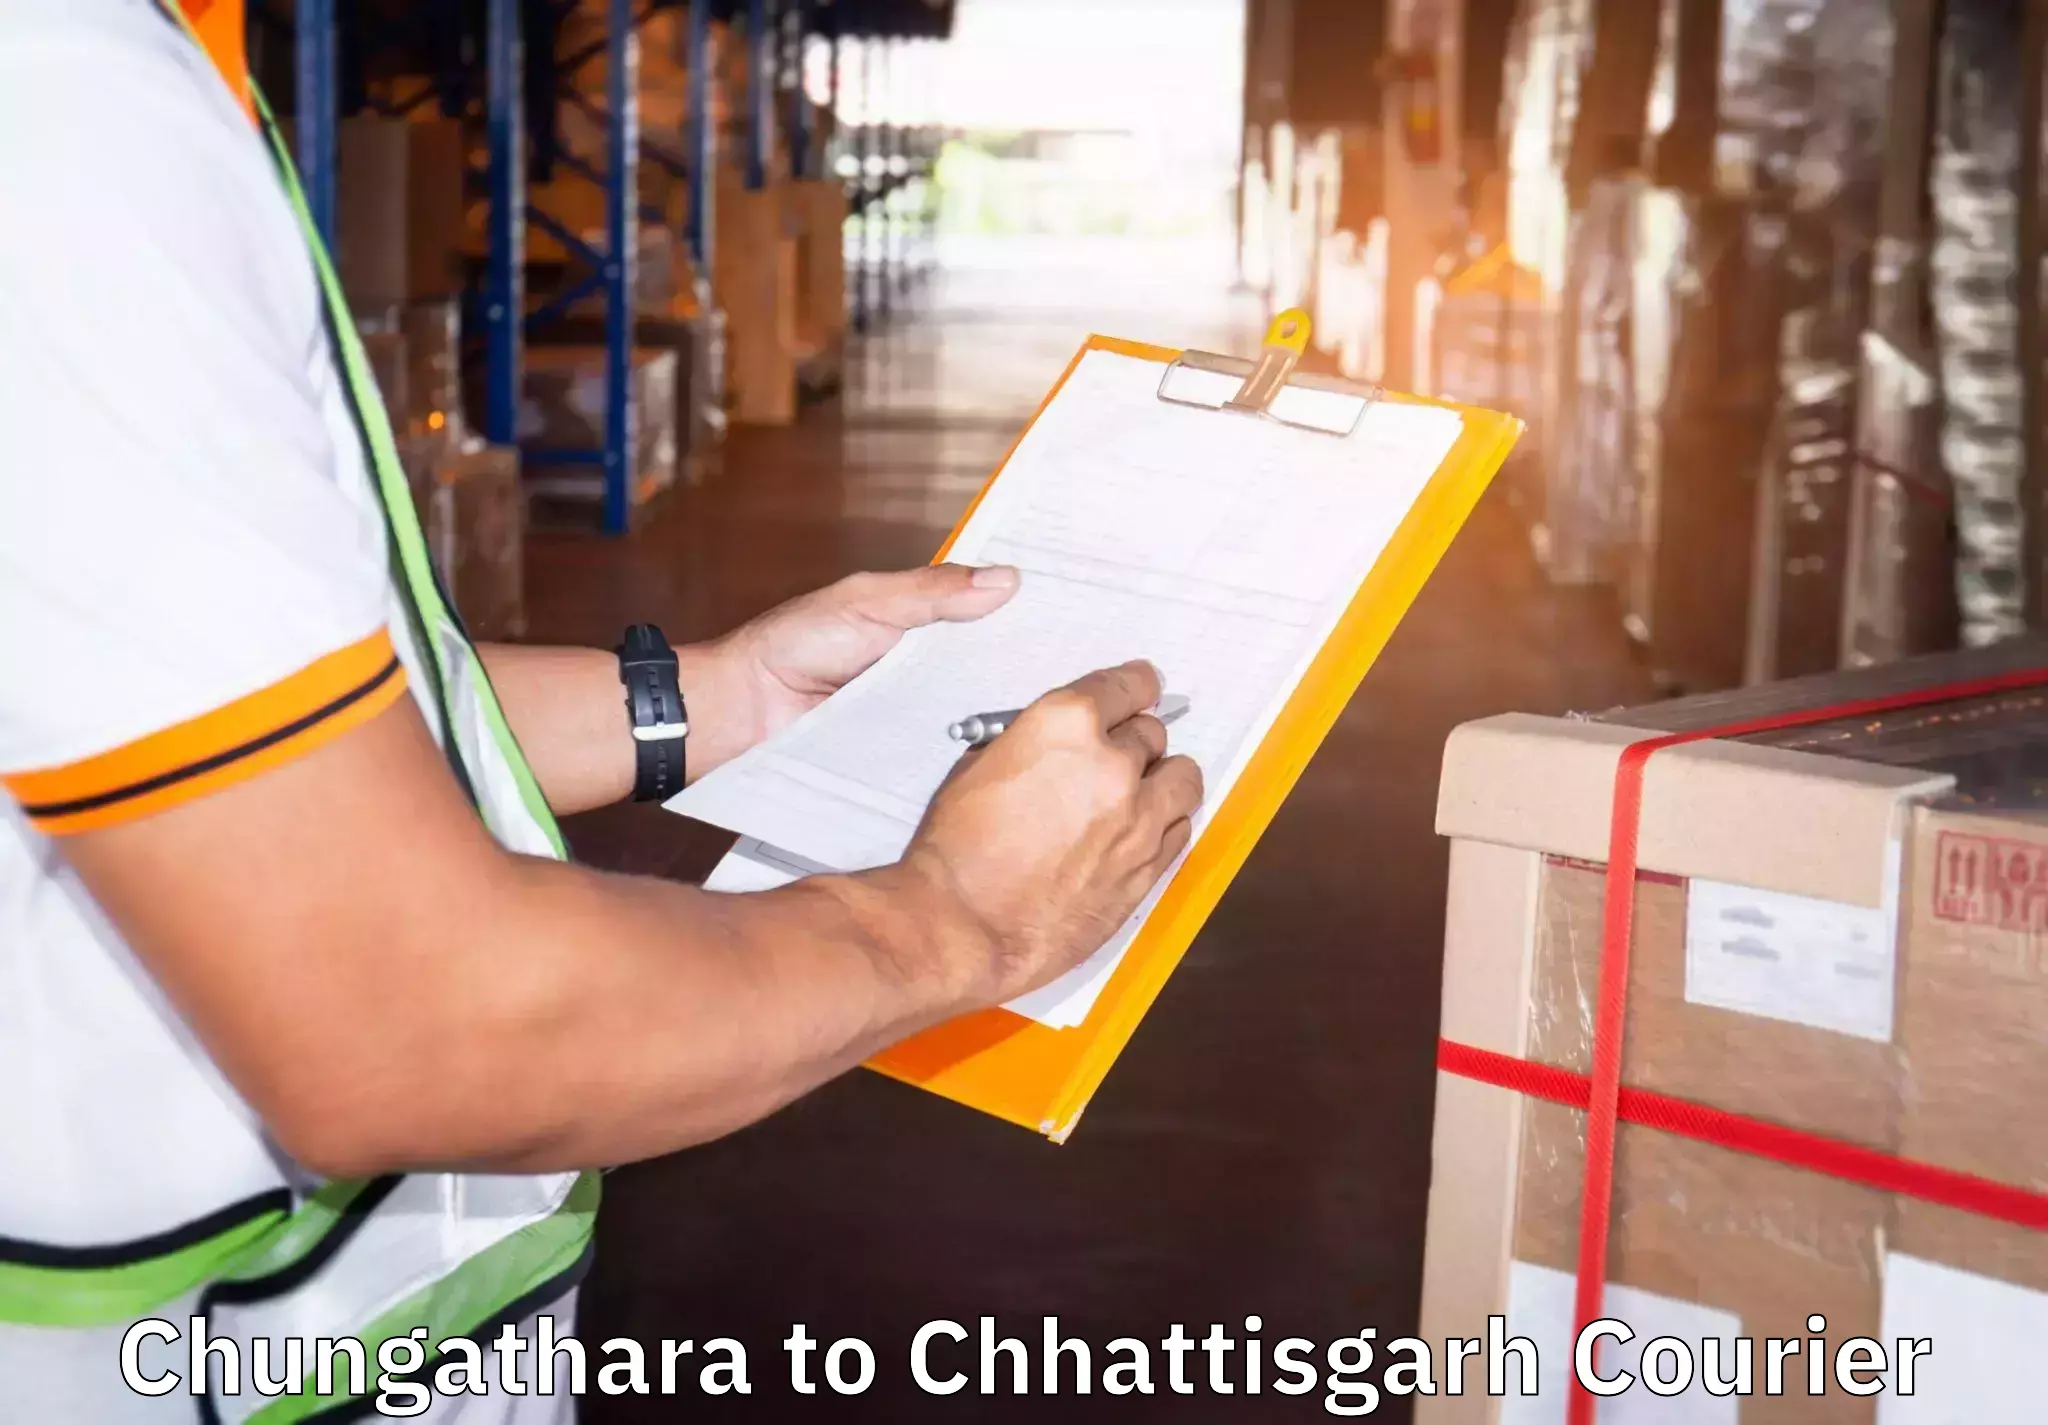 Furniture relocation experts Chungathara to Balod